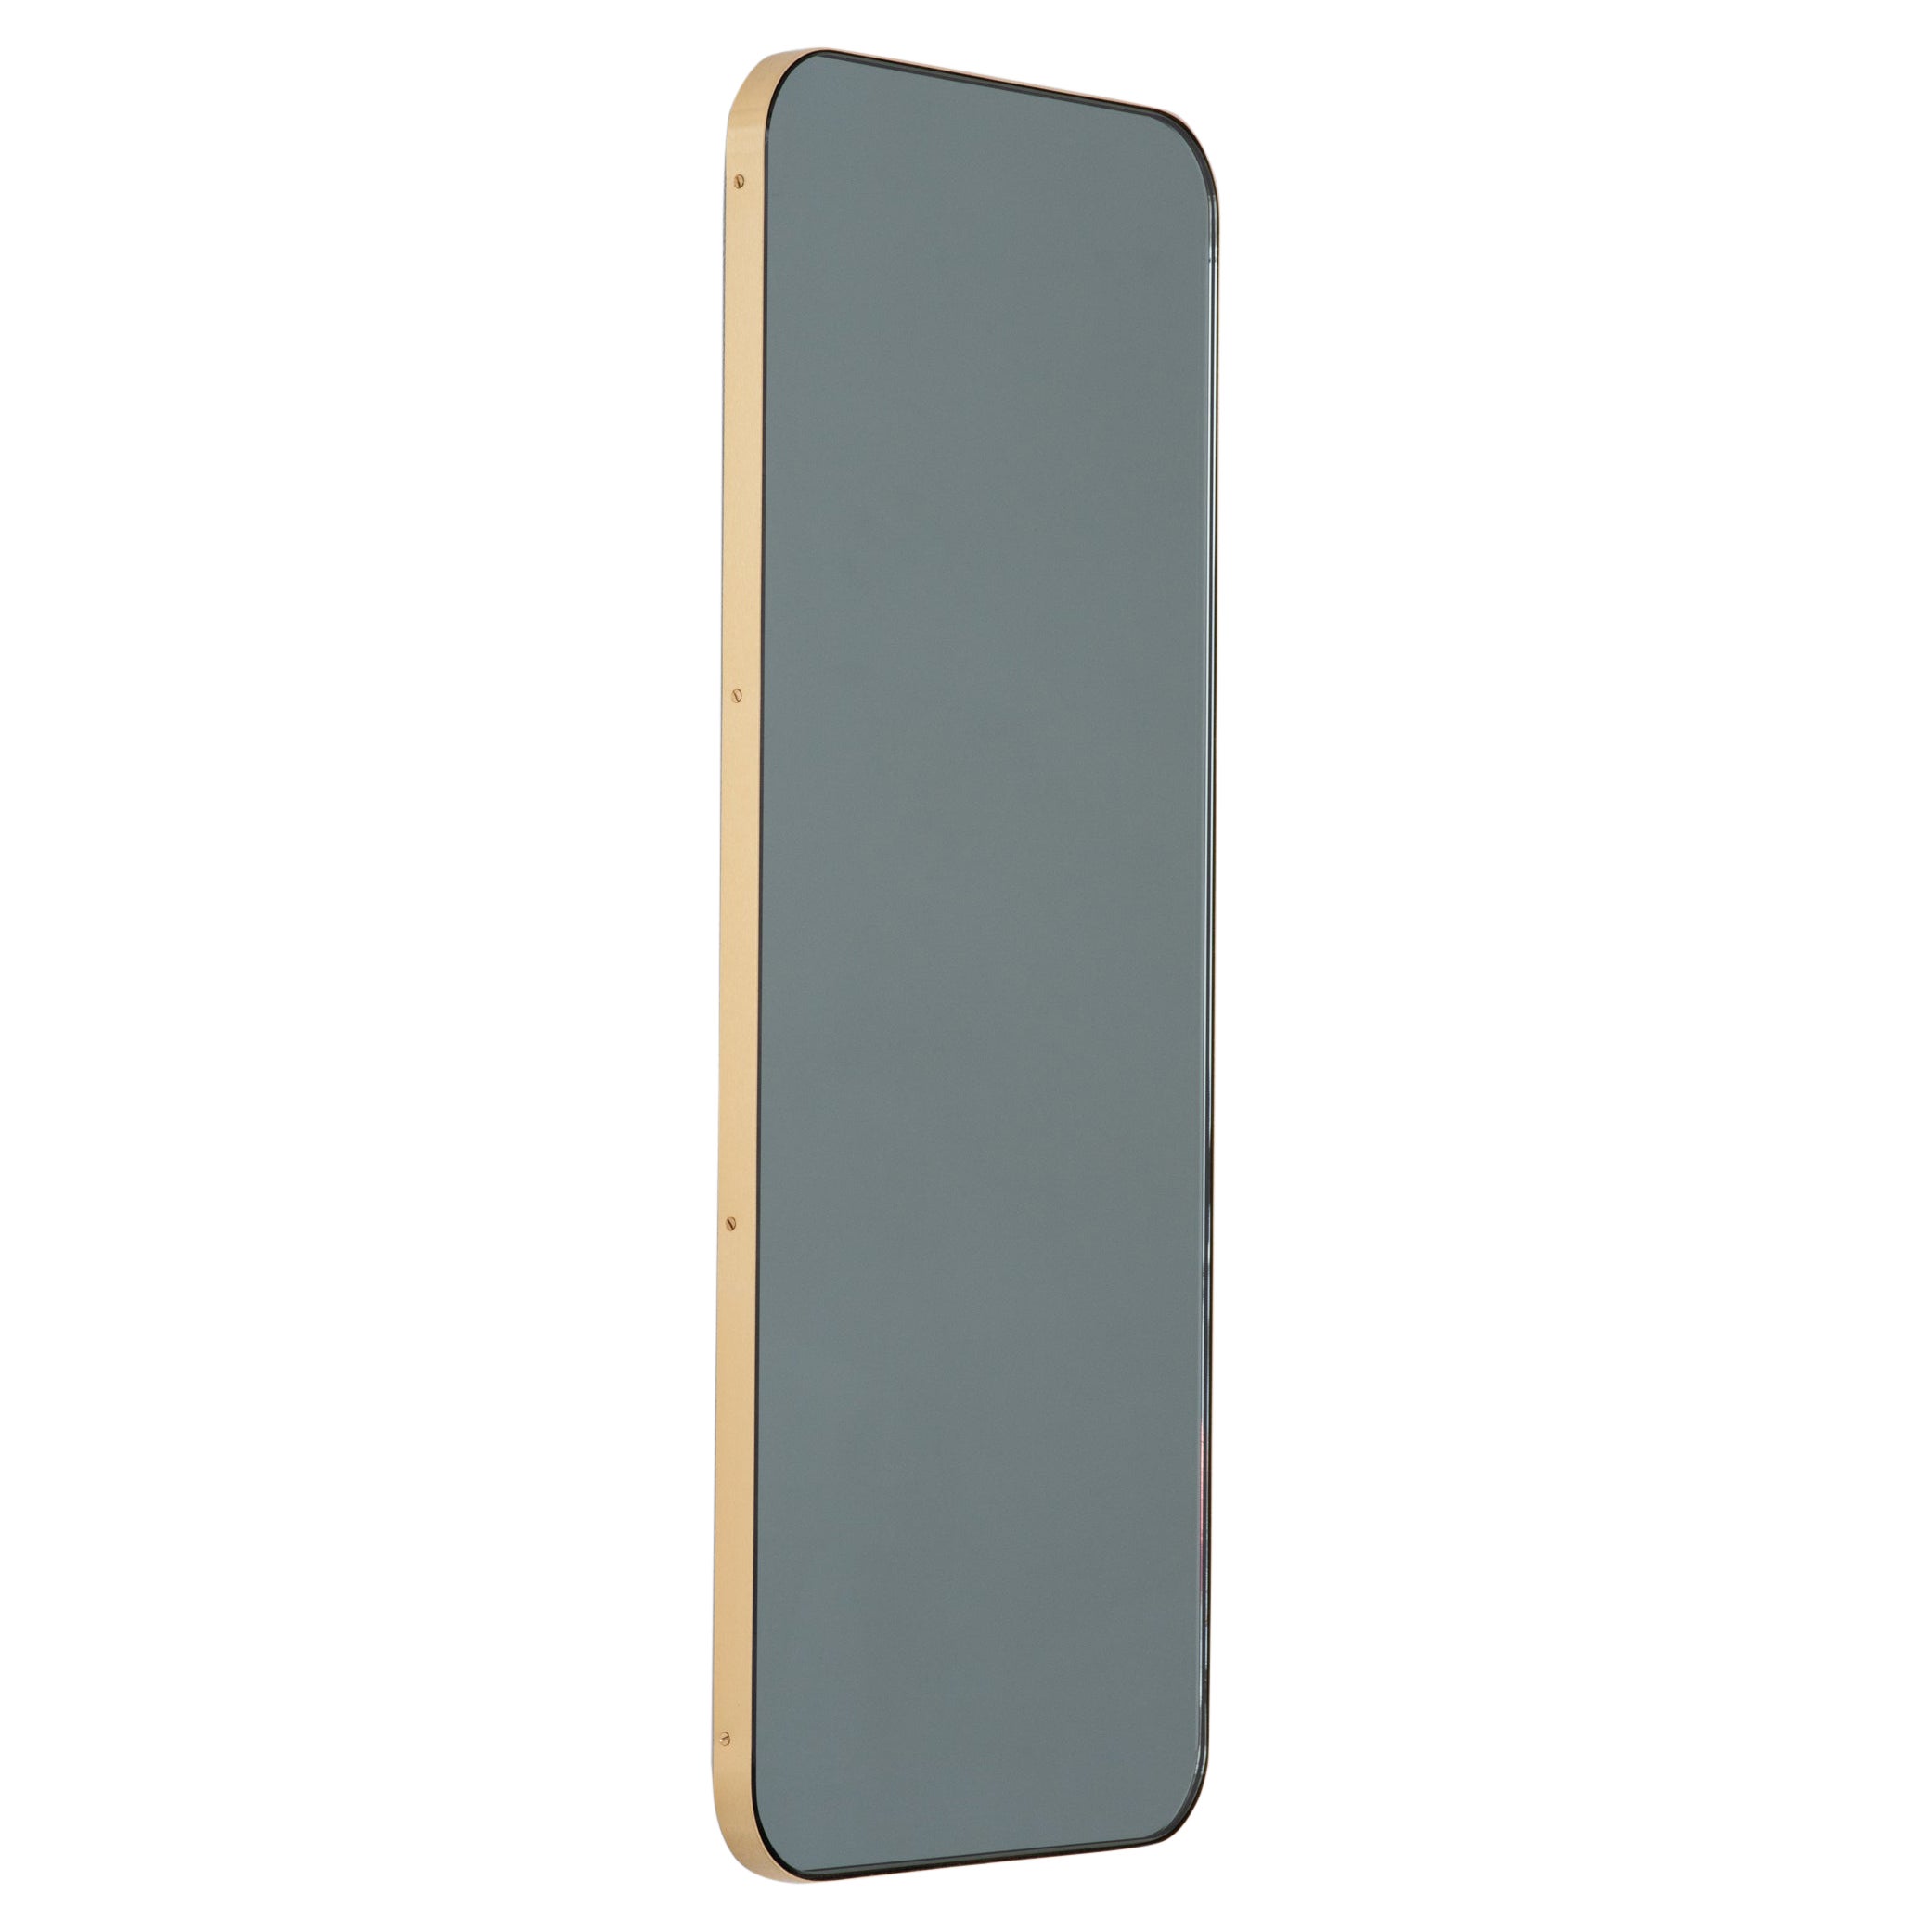 Quadris Rectangular Black Tinted Contemporary Mirror with Brass Frame, XL